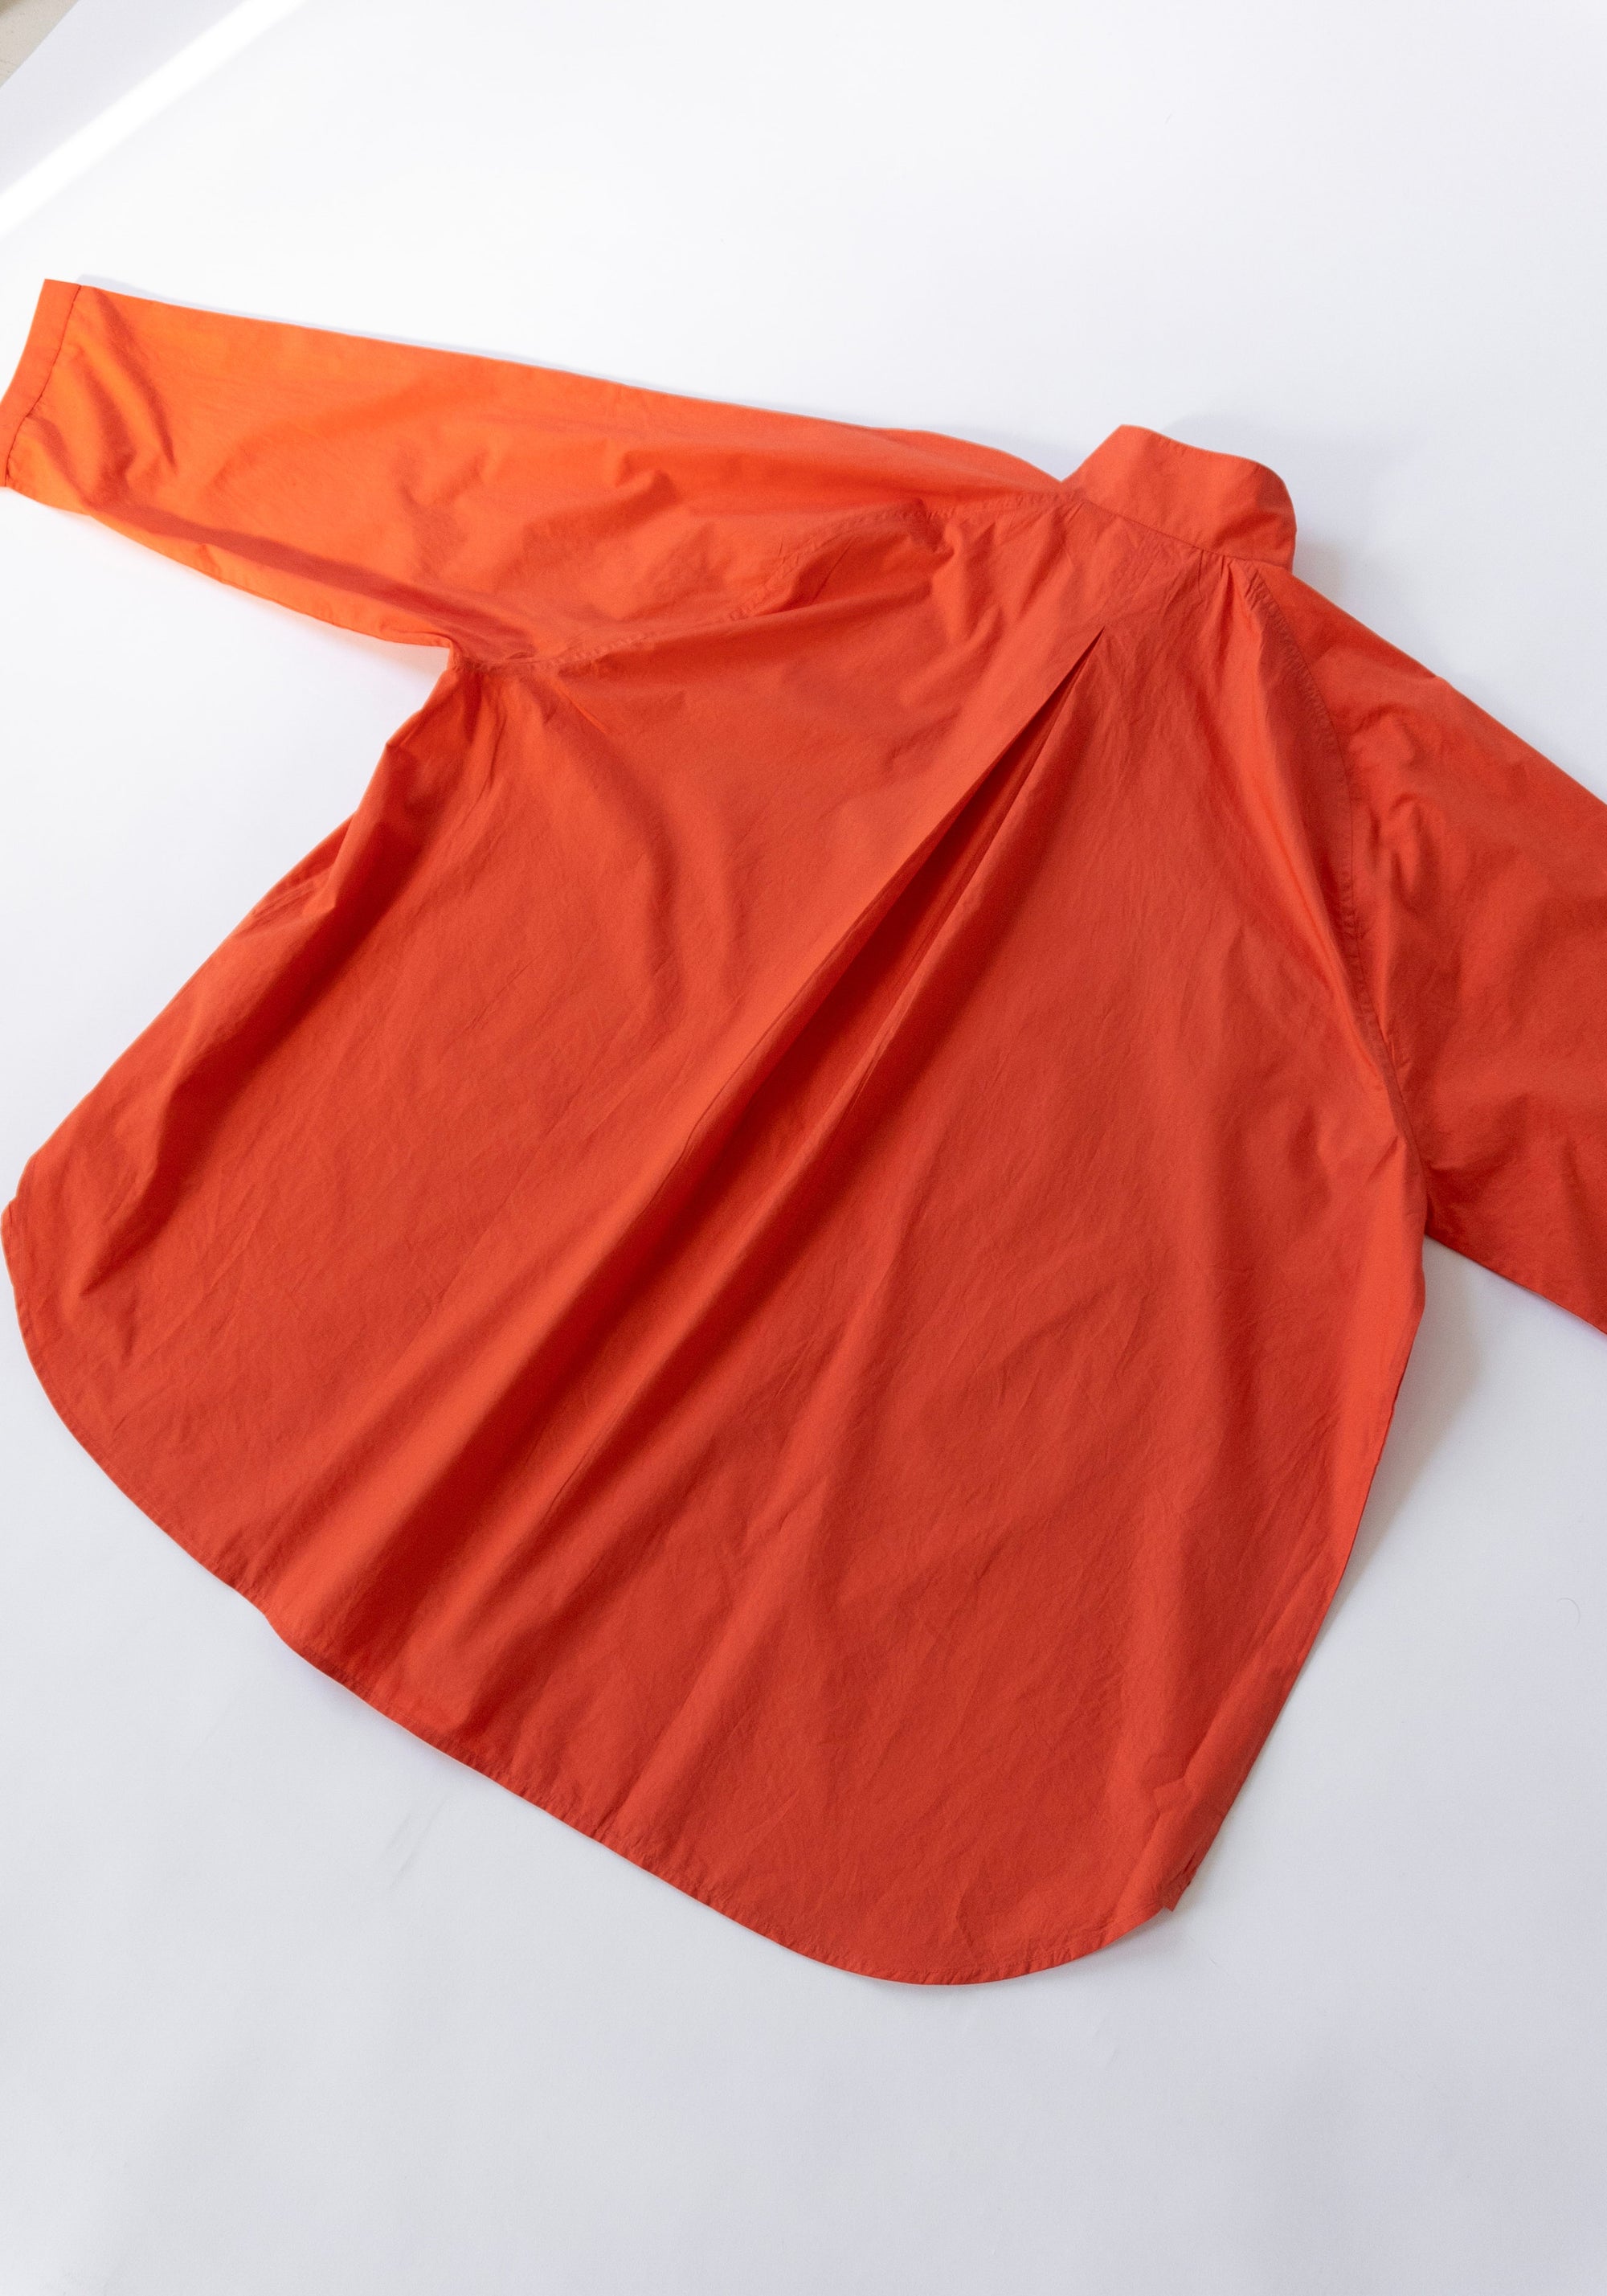 Joan Oversized Tunic in Rouge Orange